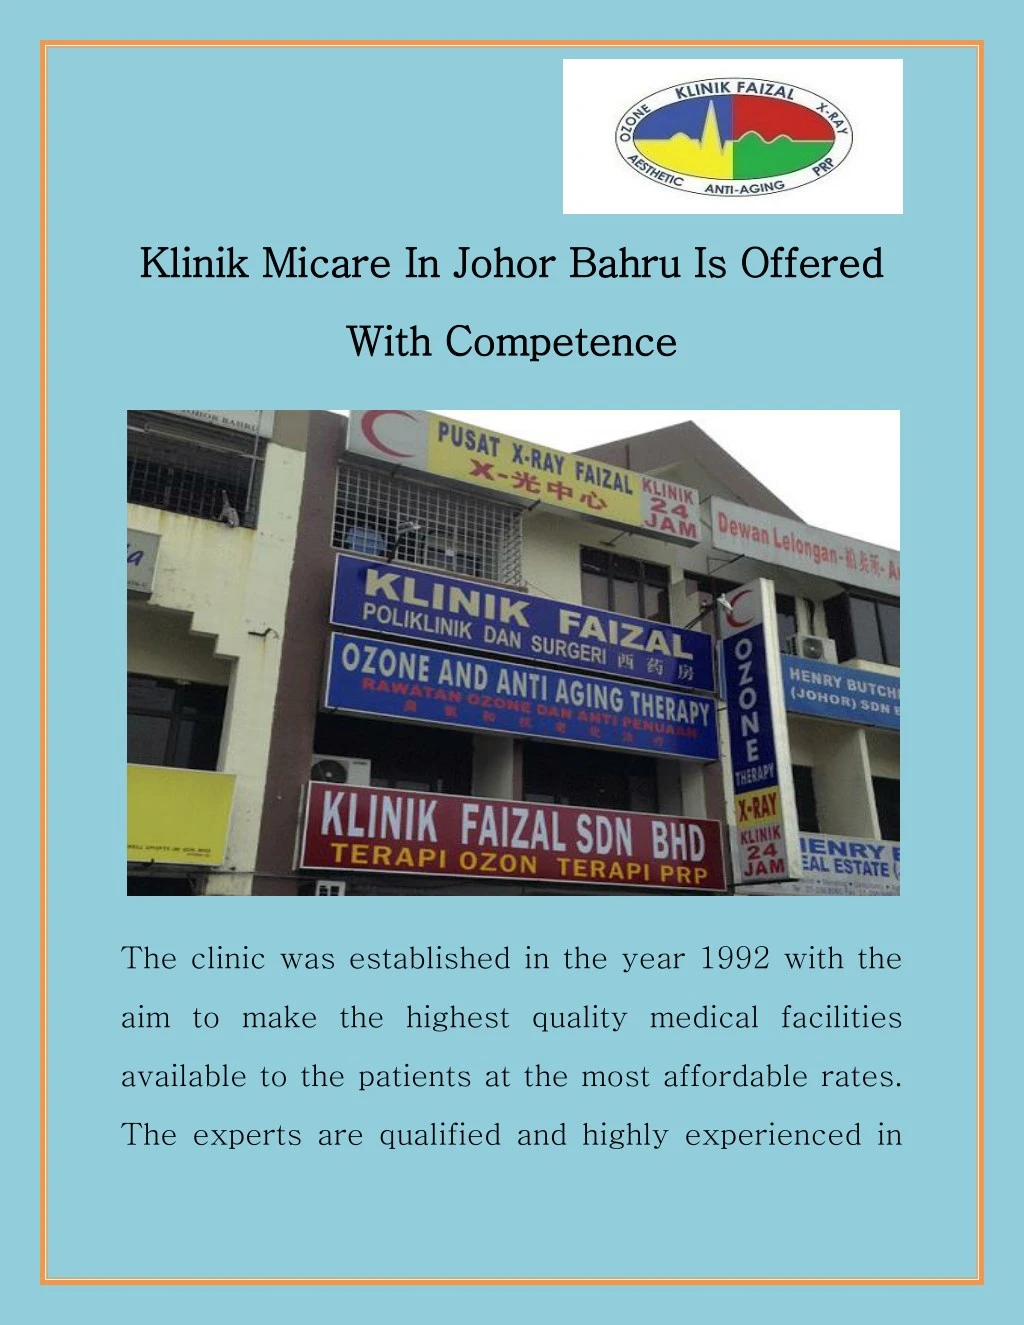 klinik micare in johor bahru is offered klinik